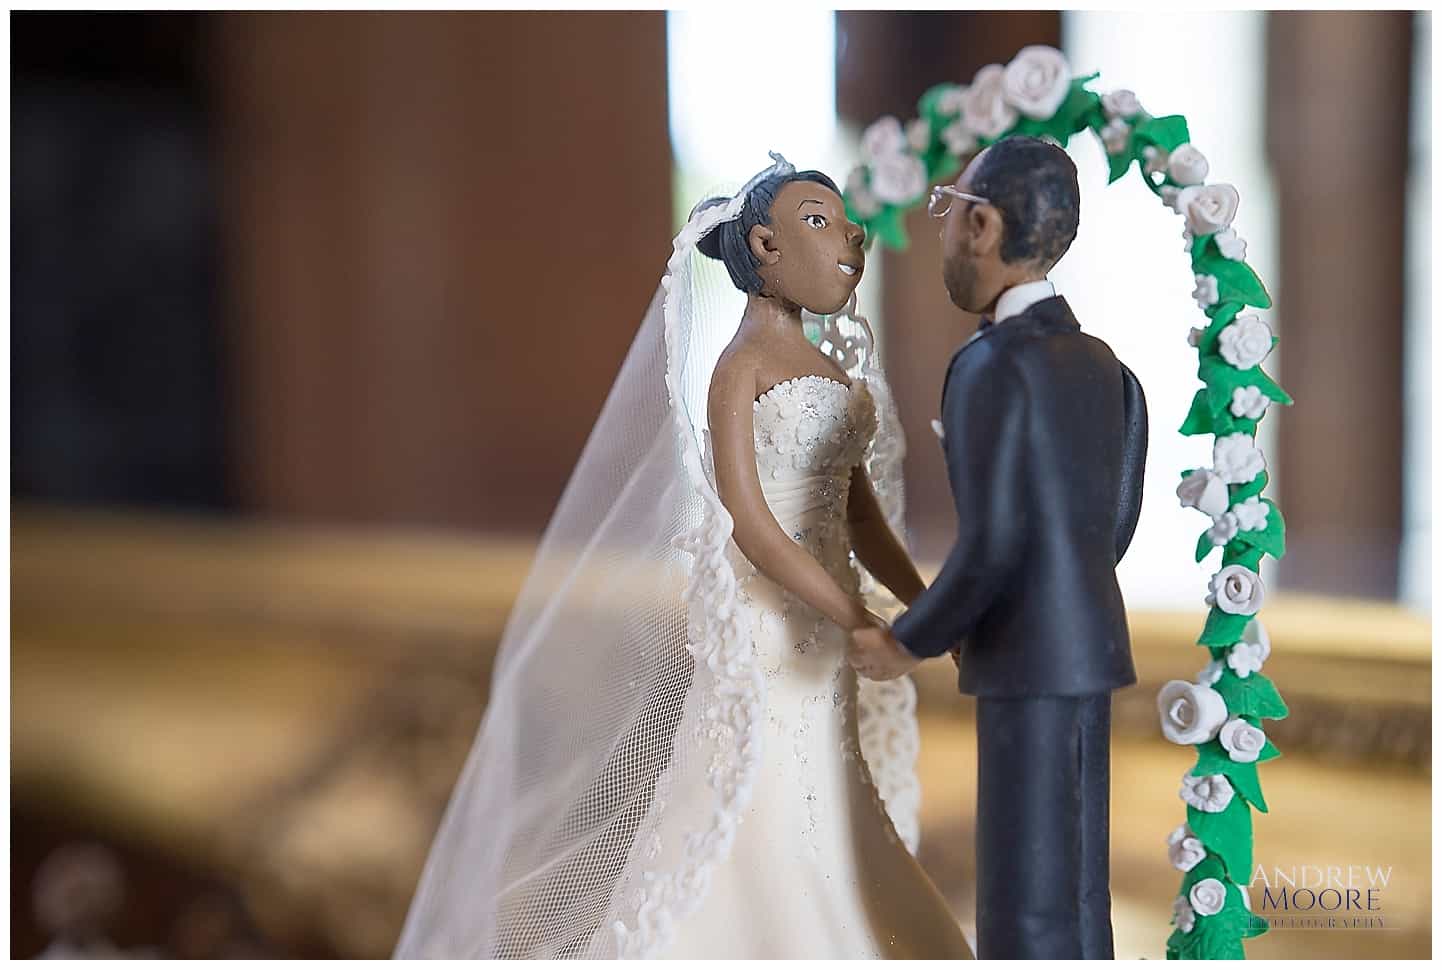 amazing wedding cake with bride and groom on top.jpg